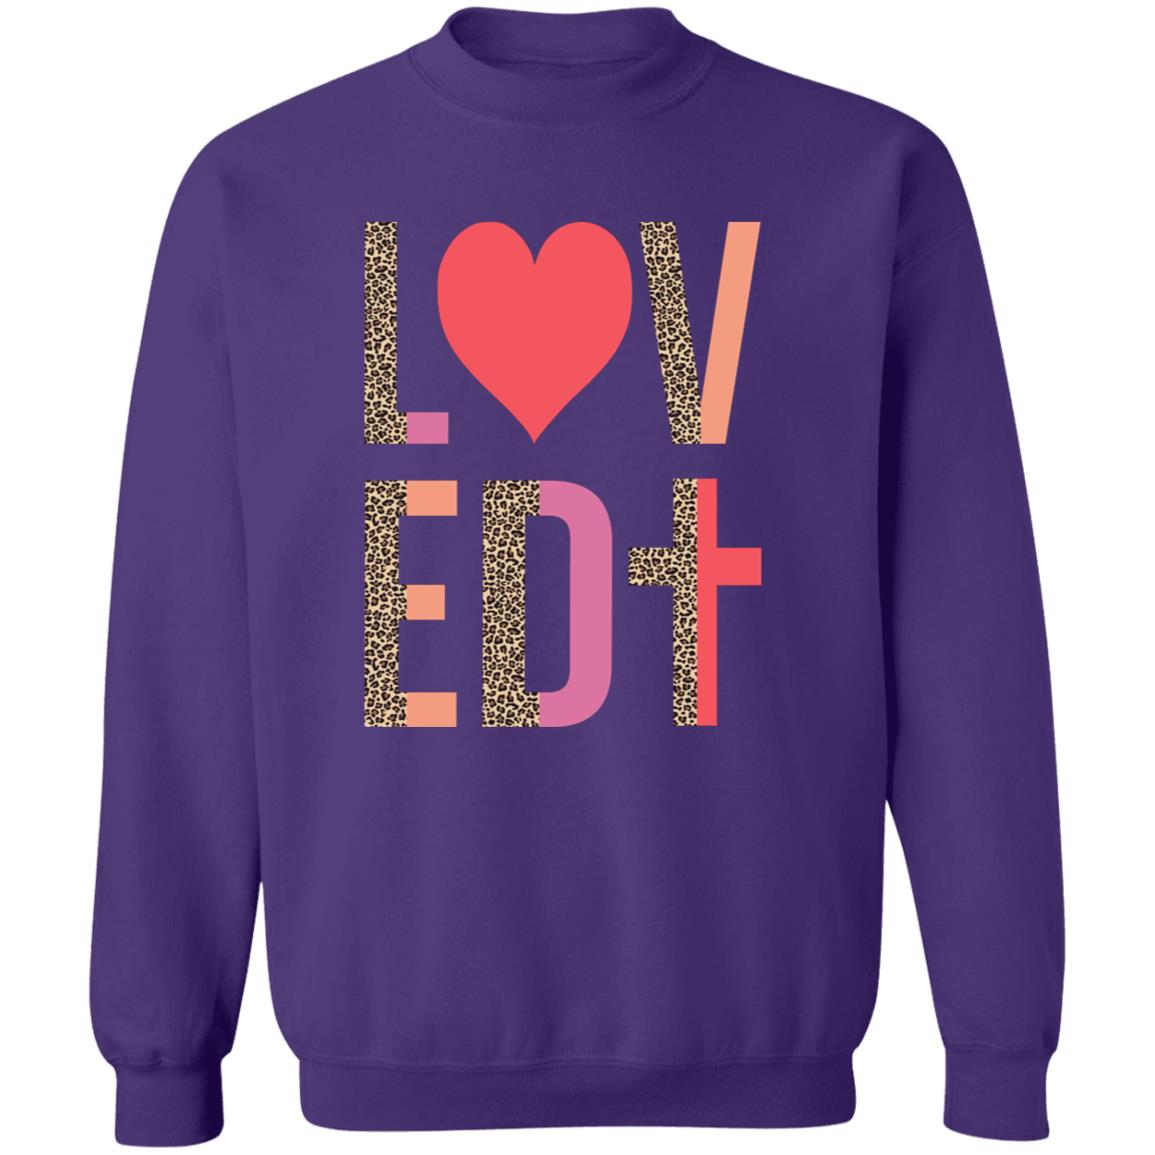 LOVED + Sweatshirt